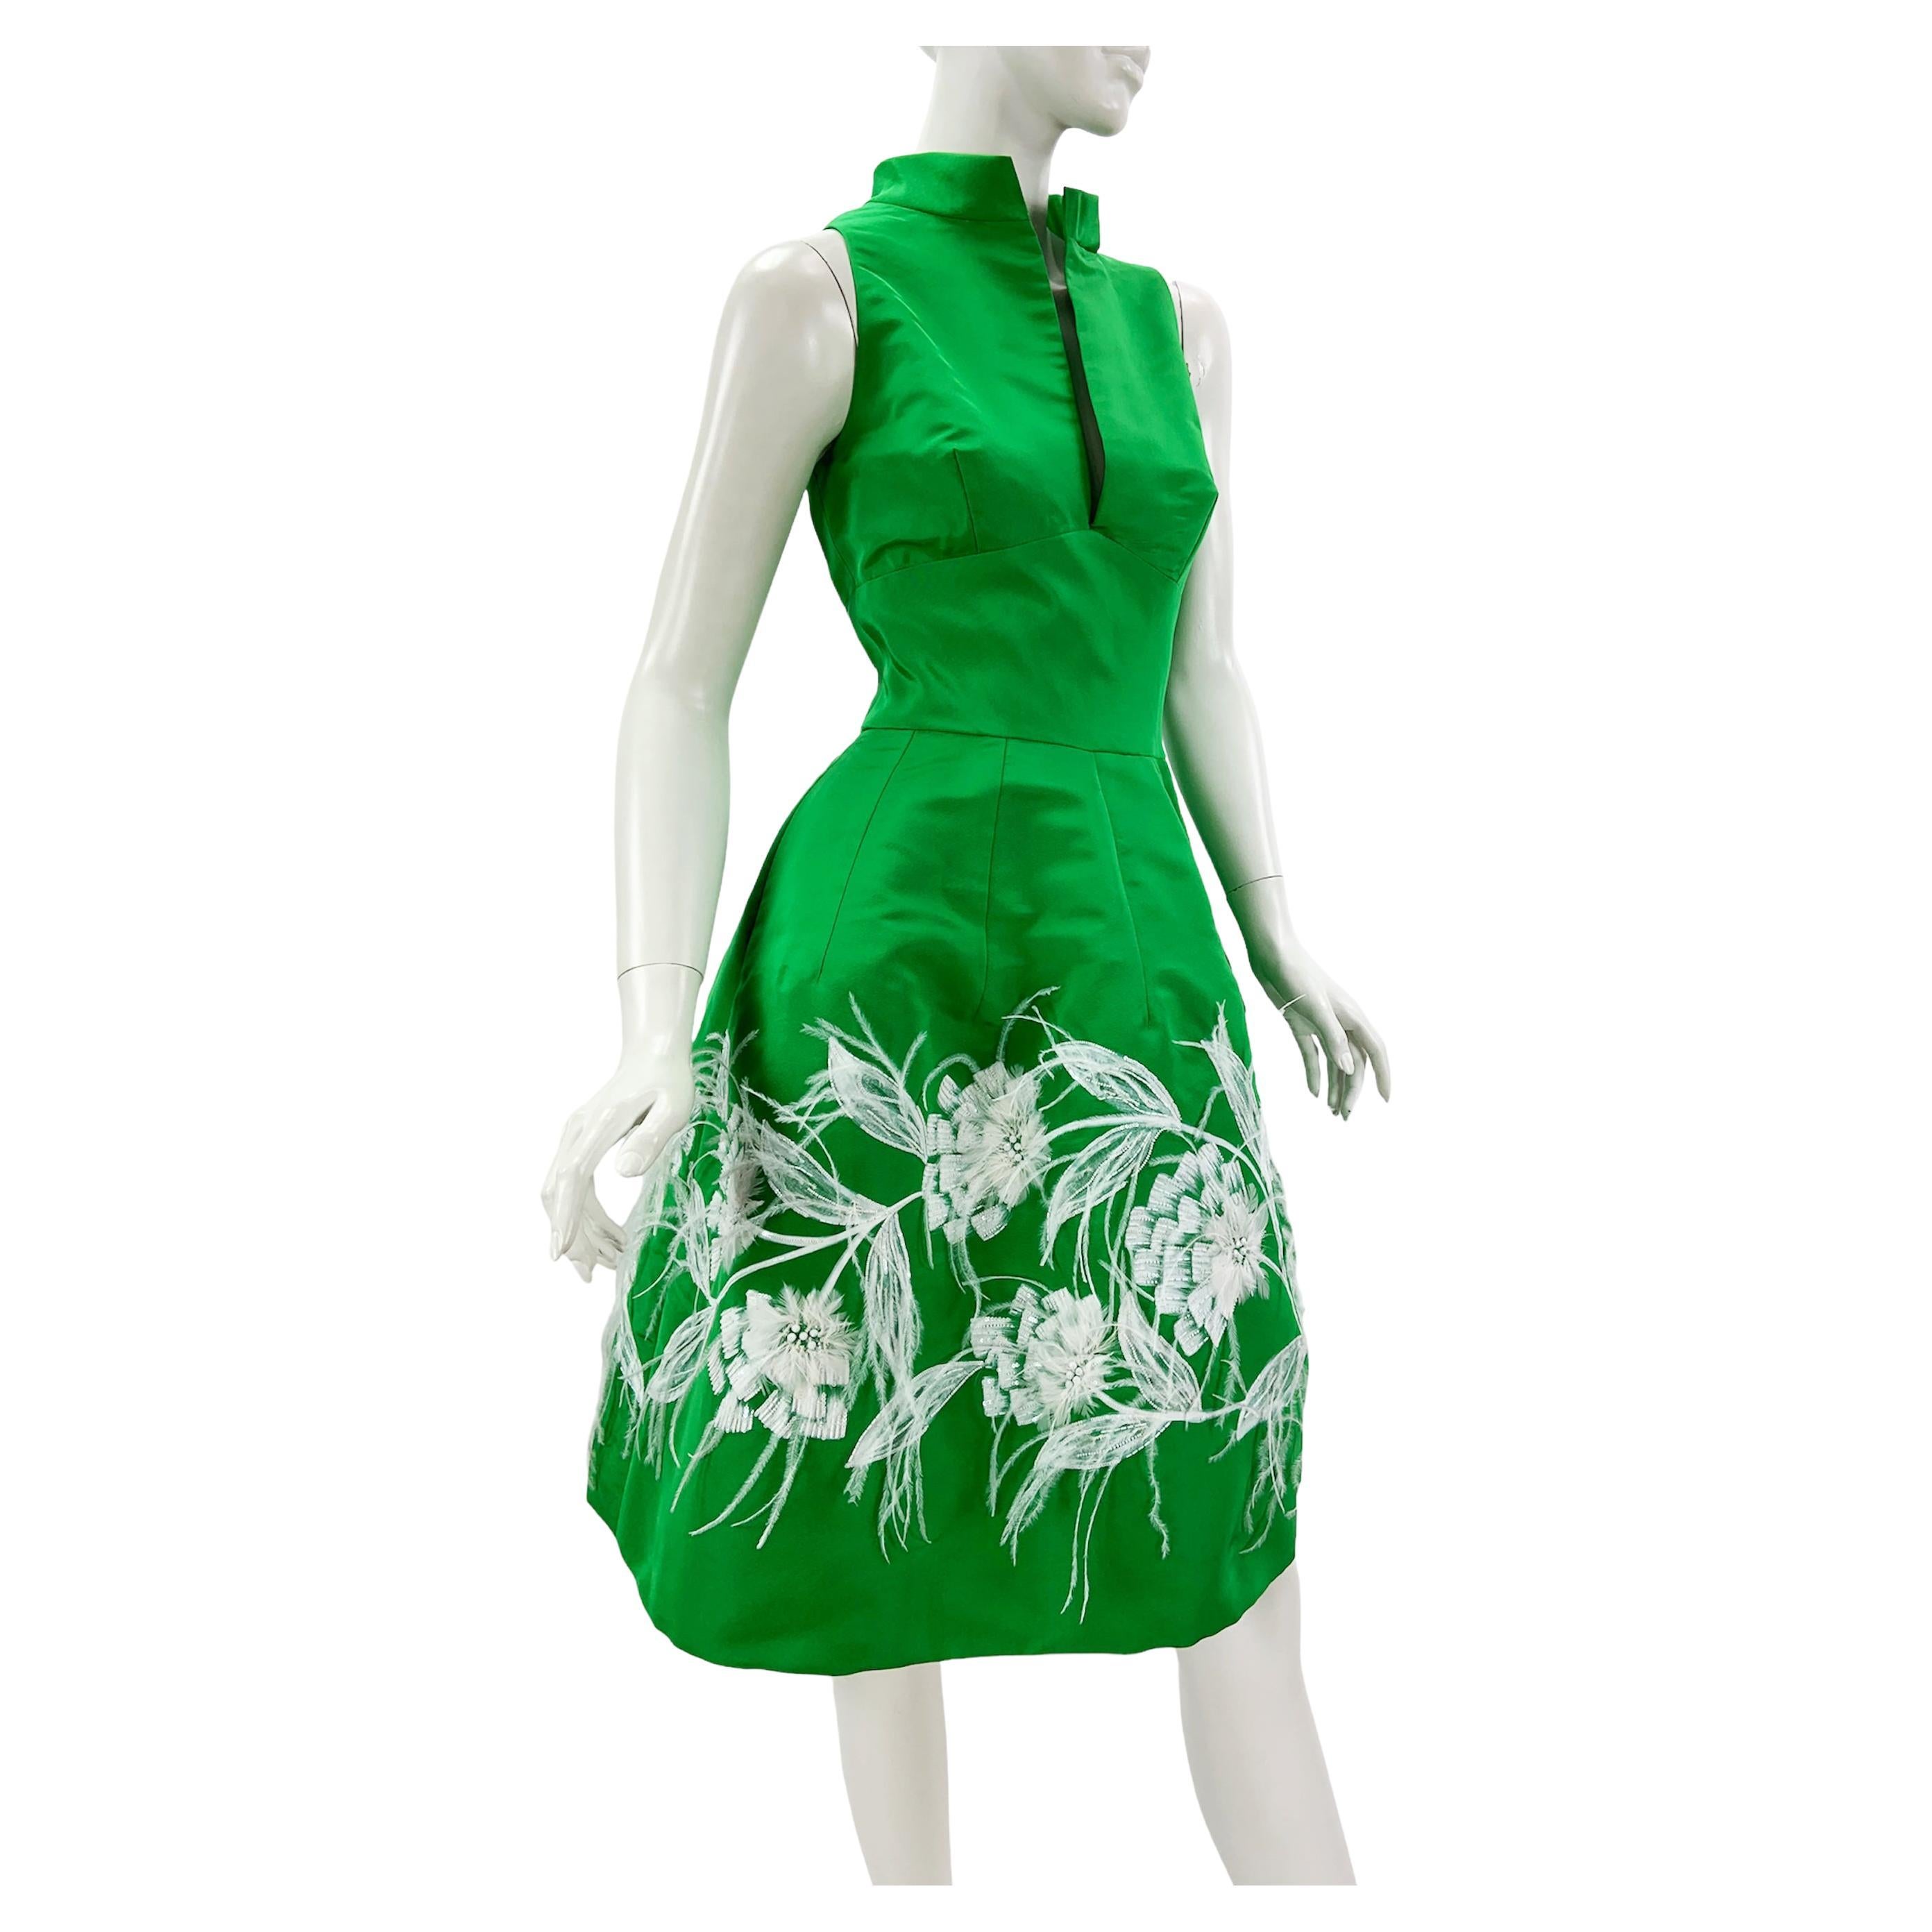 NWT Oscar de la Renta $5490 S/S 2015 Green Silk Taffeta Feather Beads Dress US 6